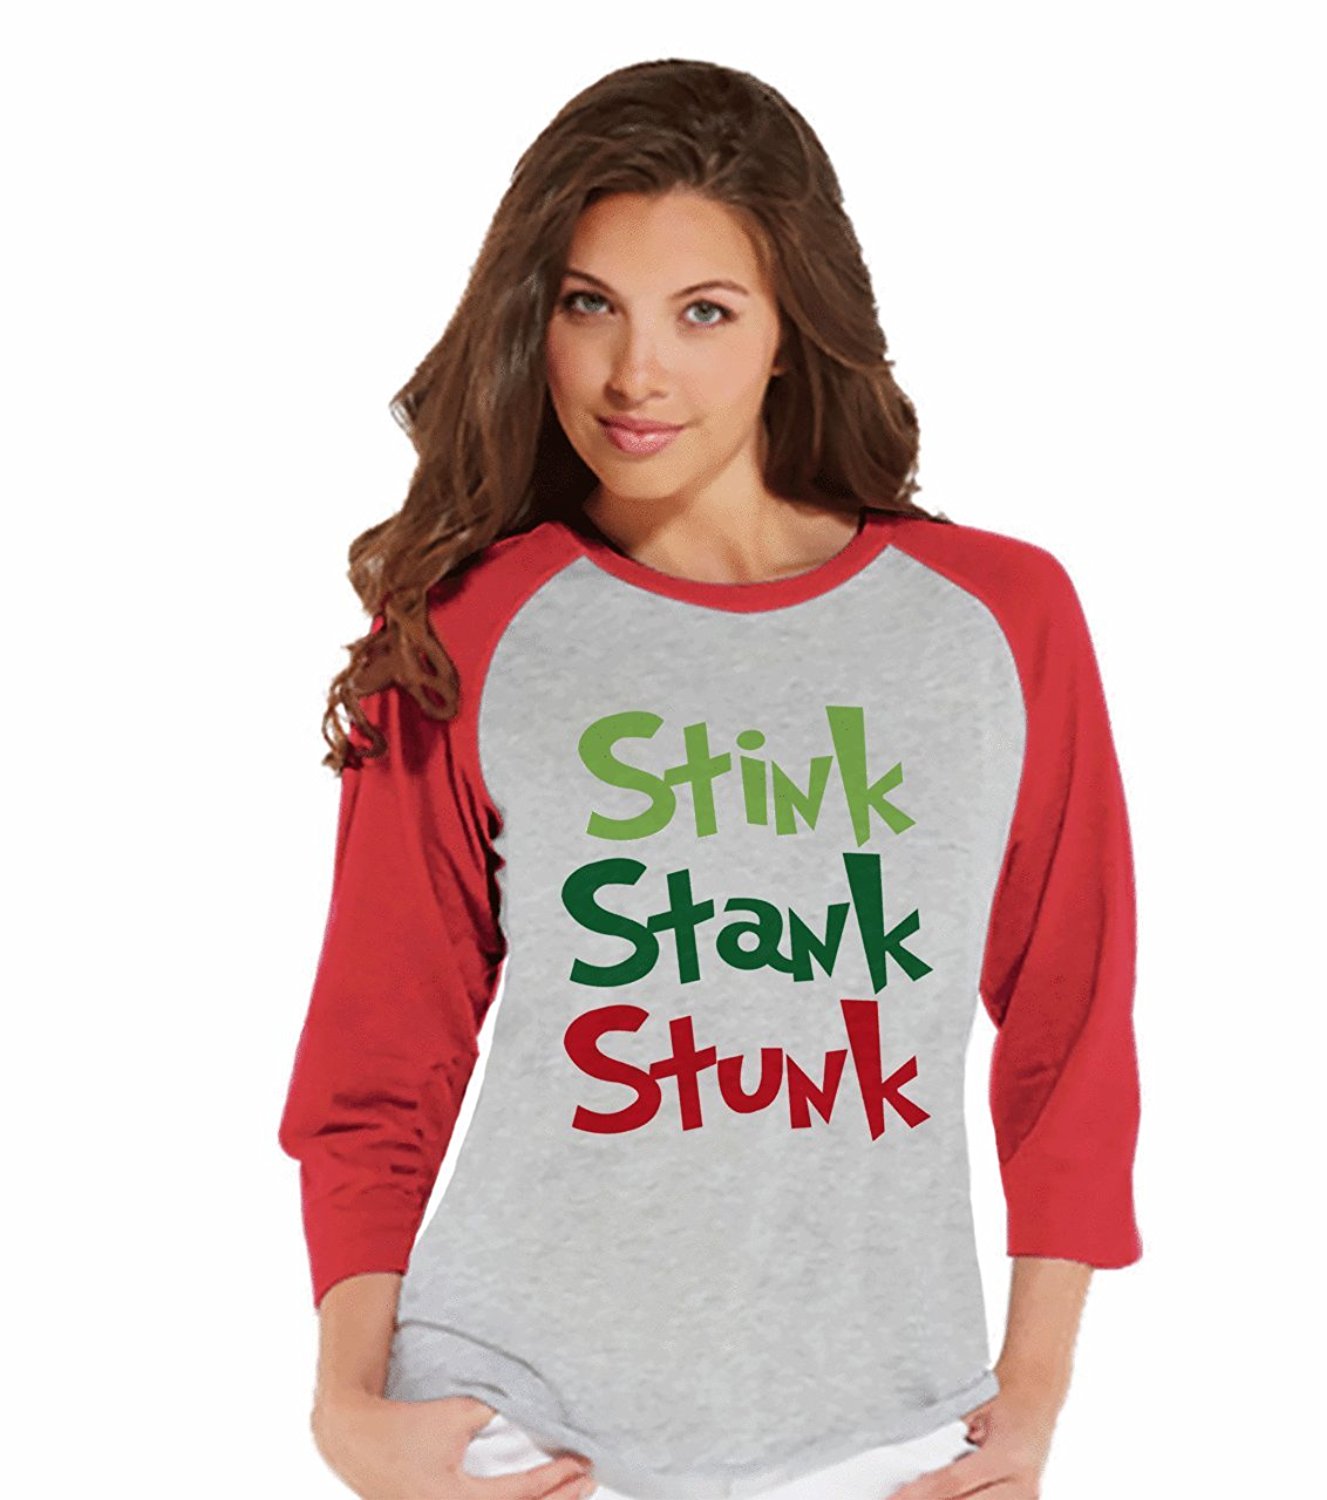 Stink, Stank, Stunk - Women's Red Raglan Tee